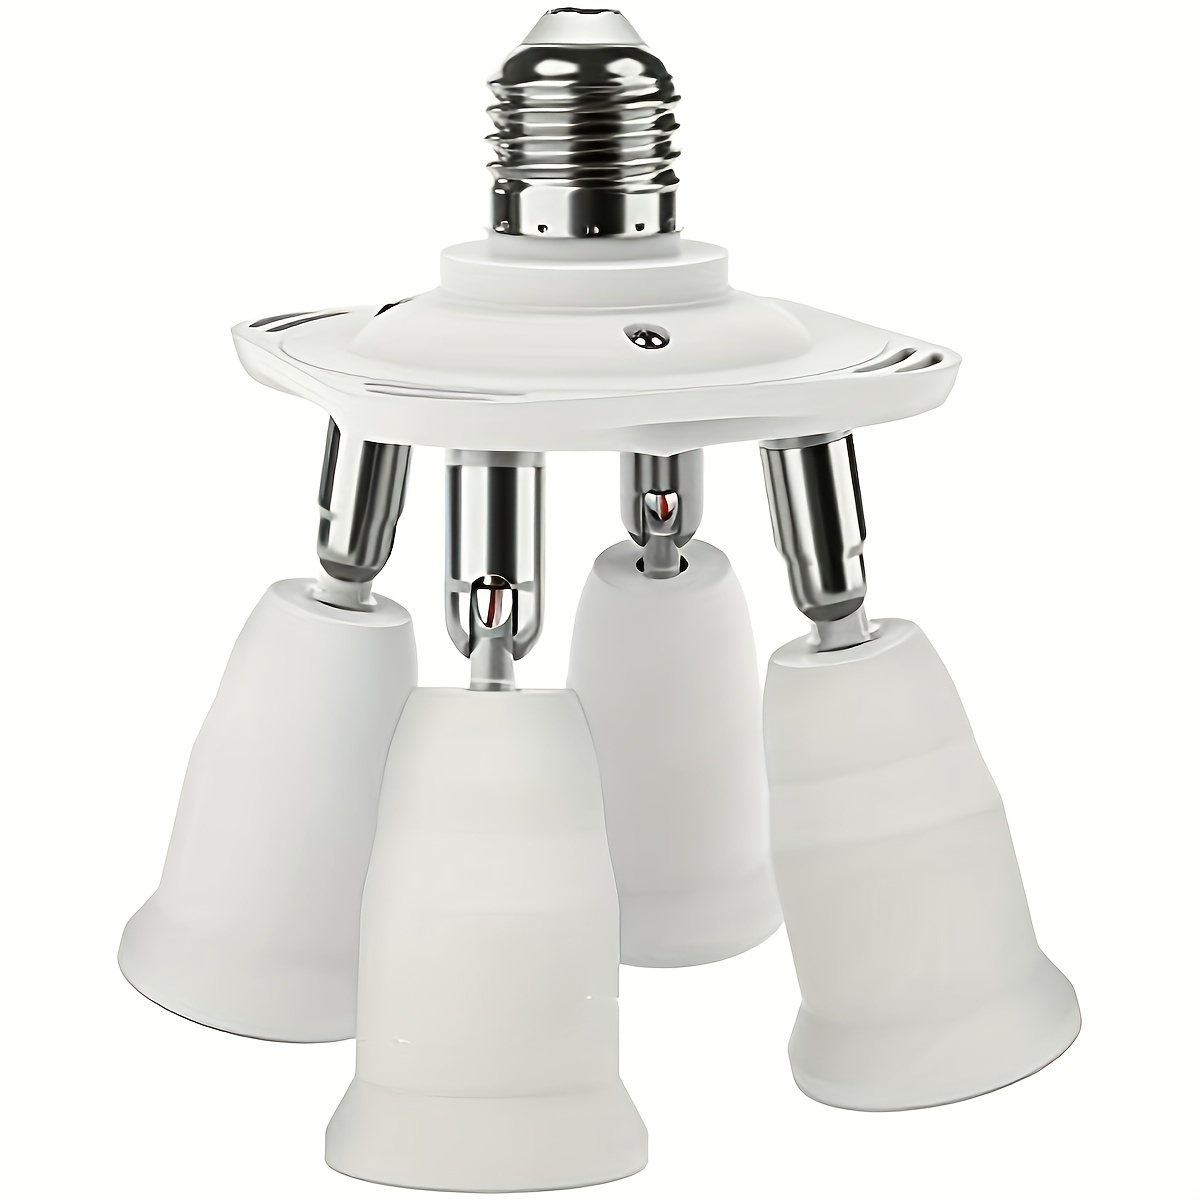 2 unids bombilla enchufe enchufe lámpara soporte adaptador de enchufe de  luz toma de luz enchufe adaptador de enchufe temporizador bombilla lámpara